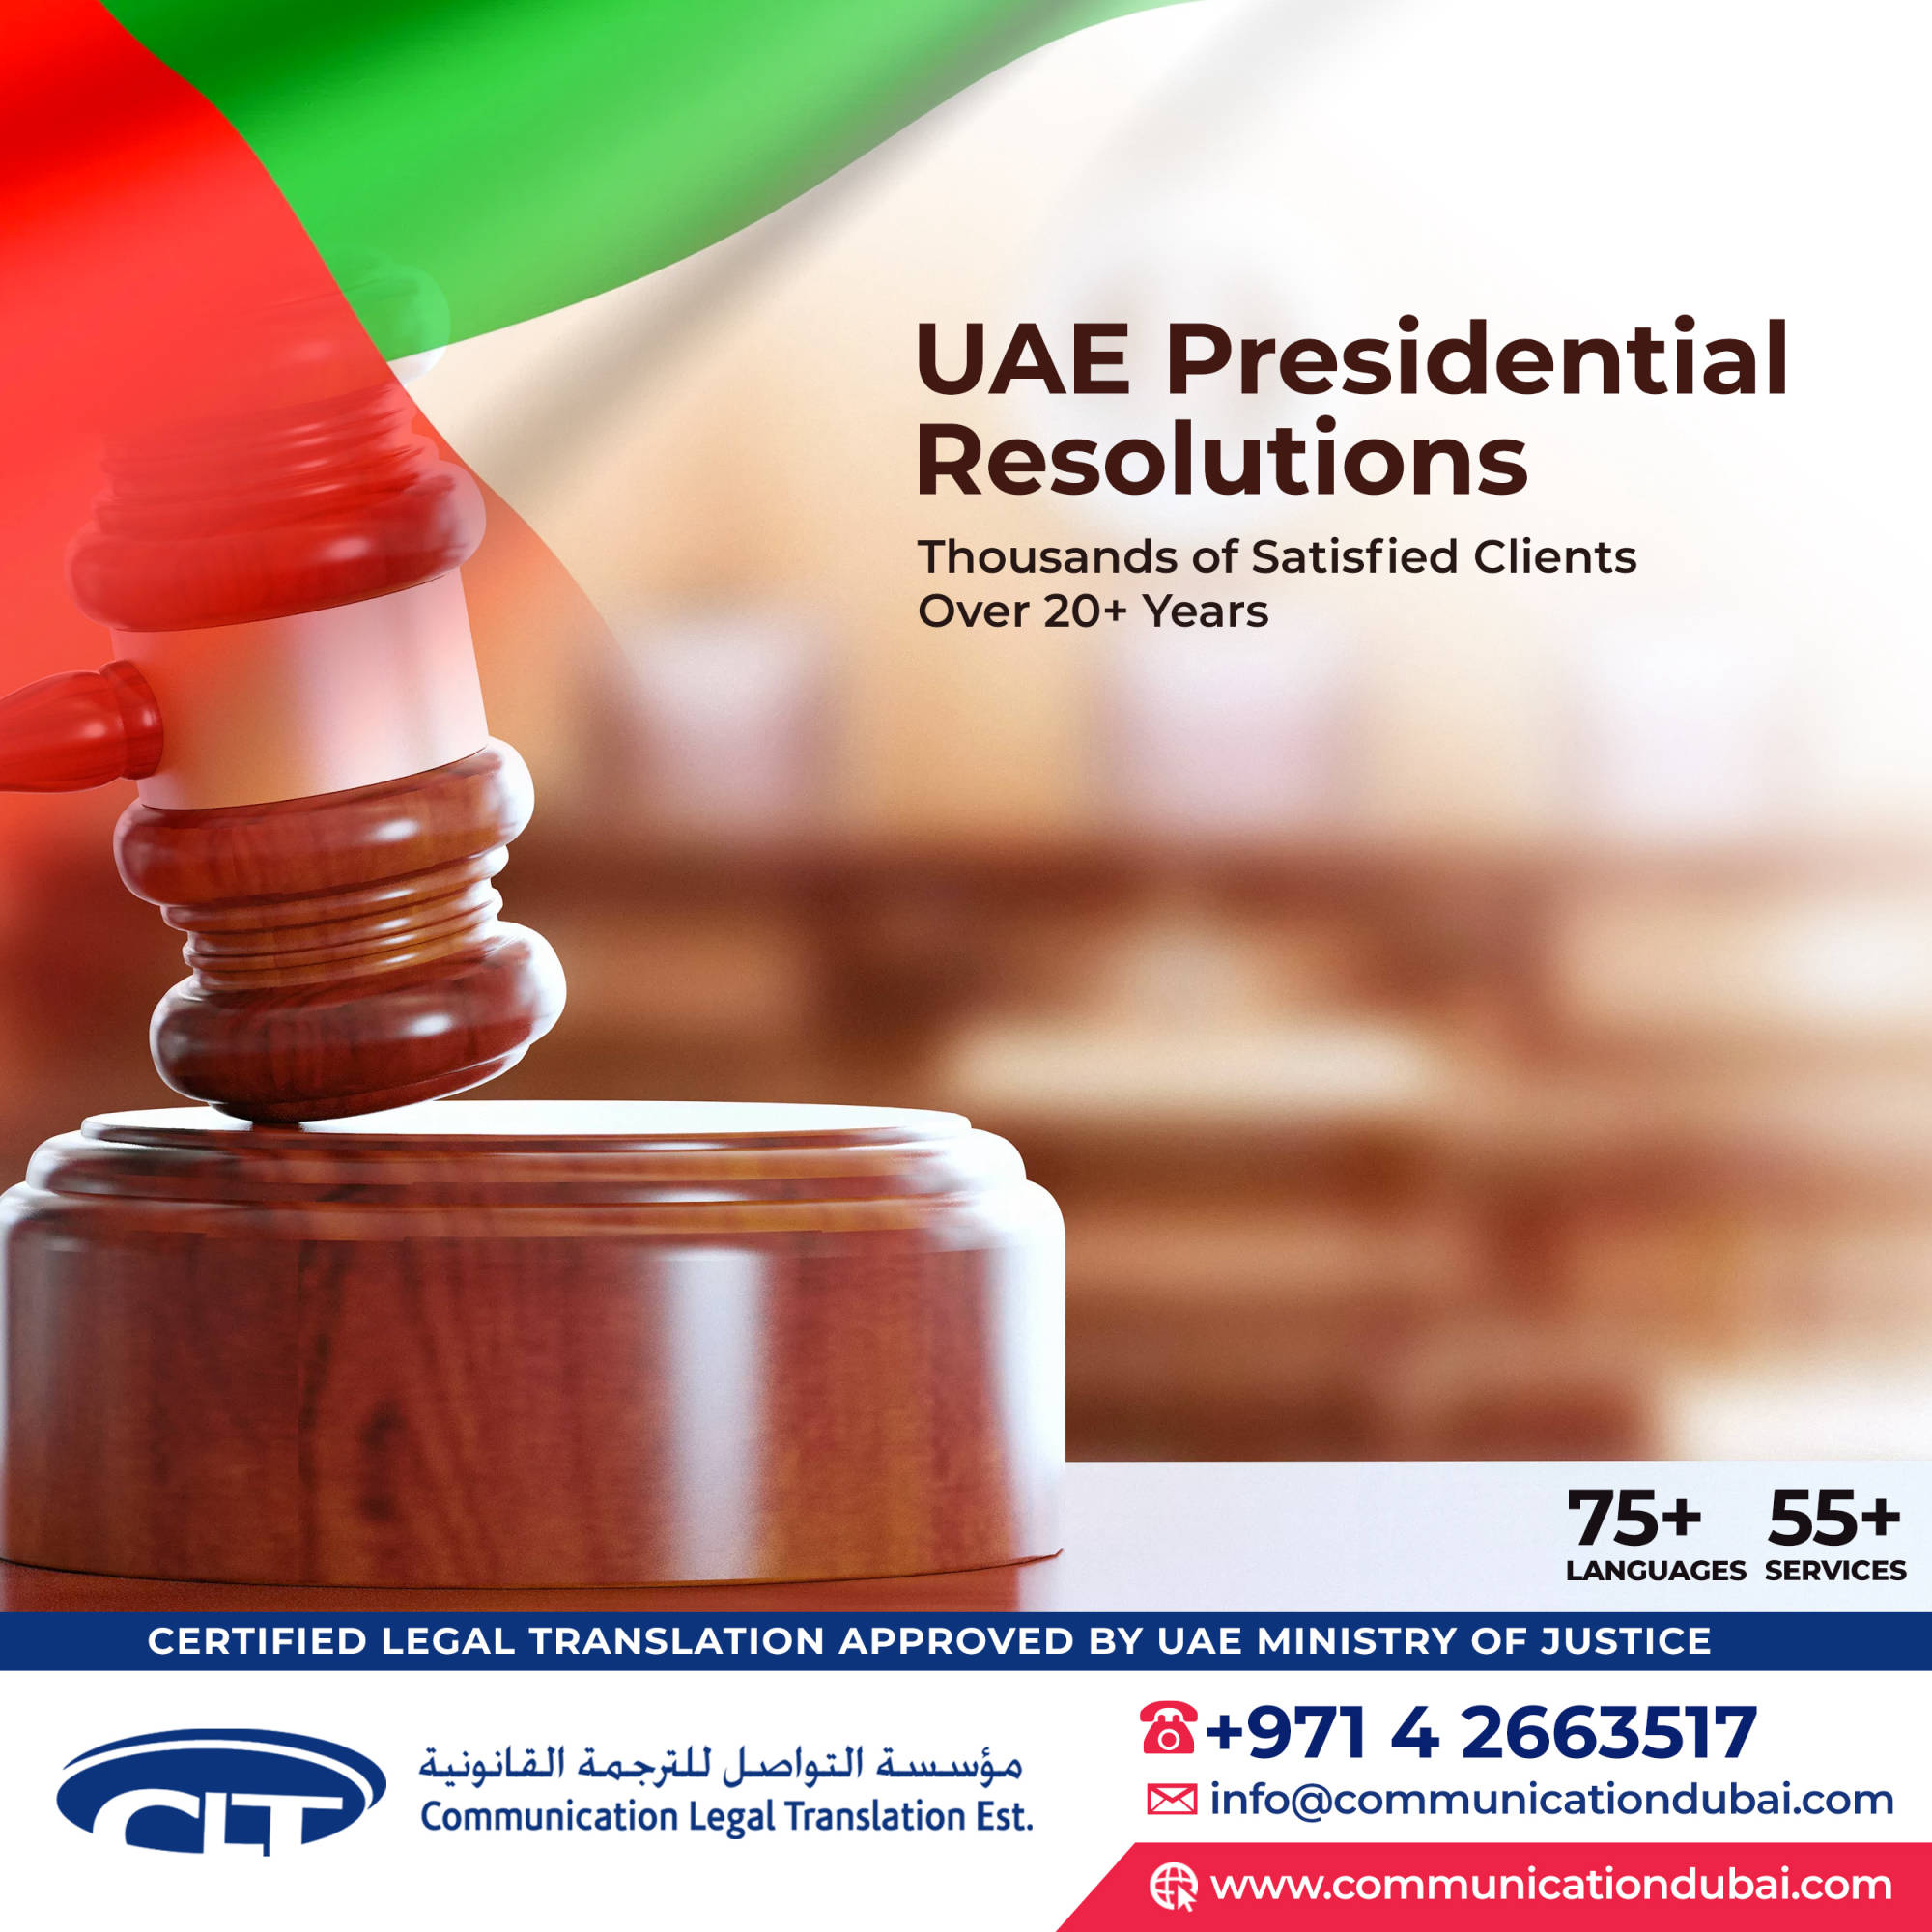 UAE Presidential Resolutions 